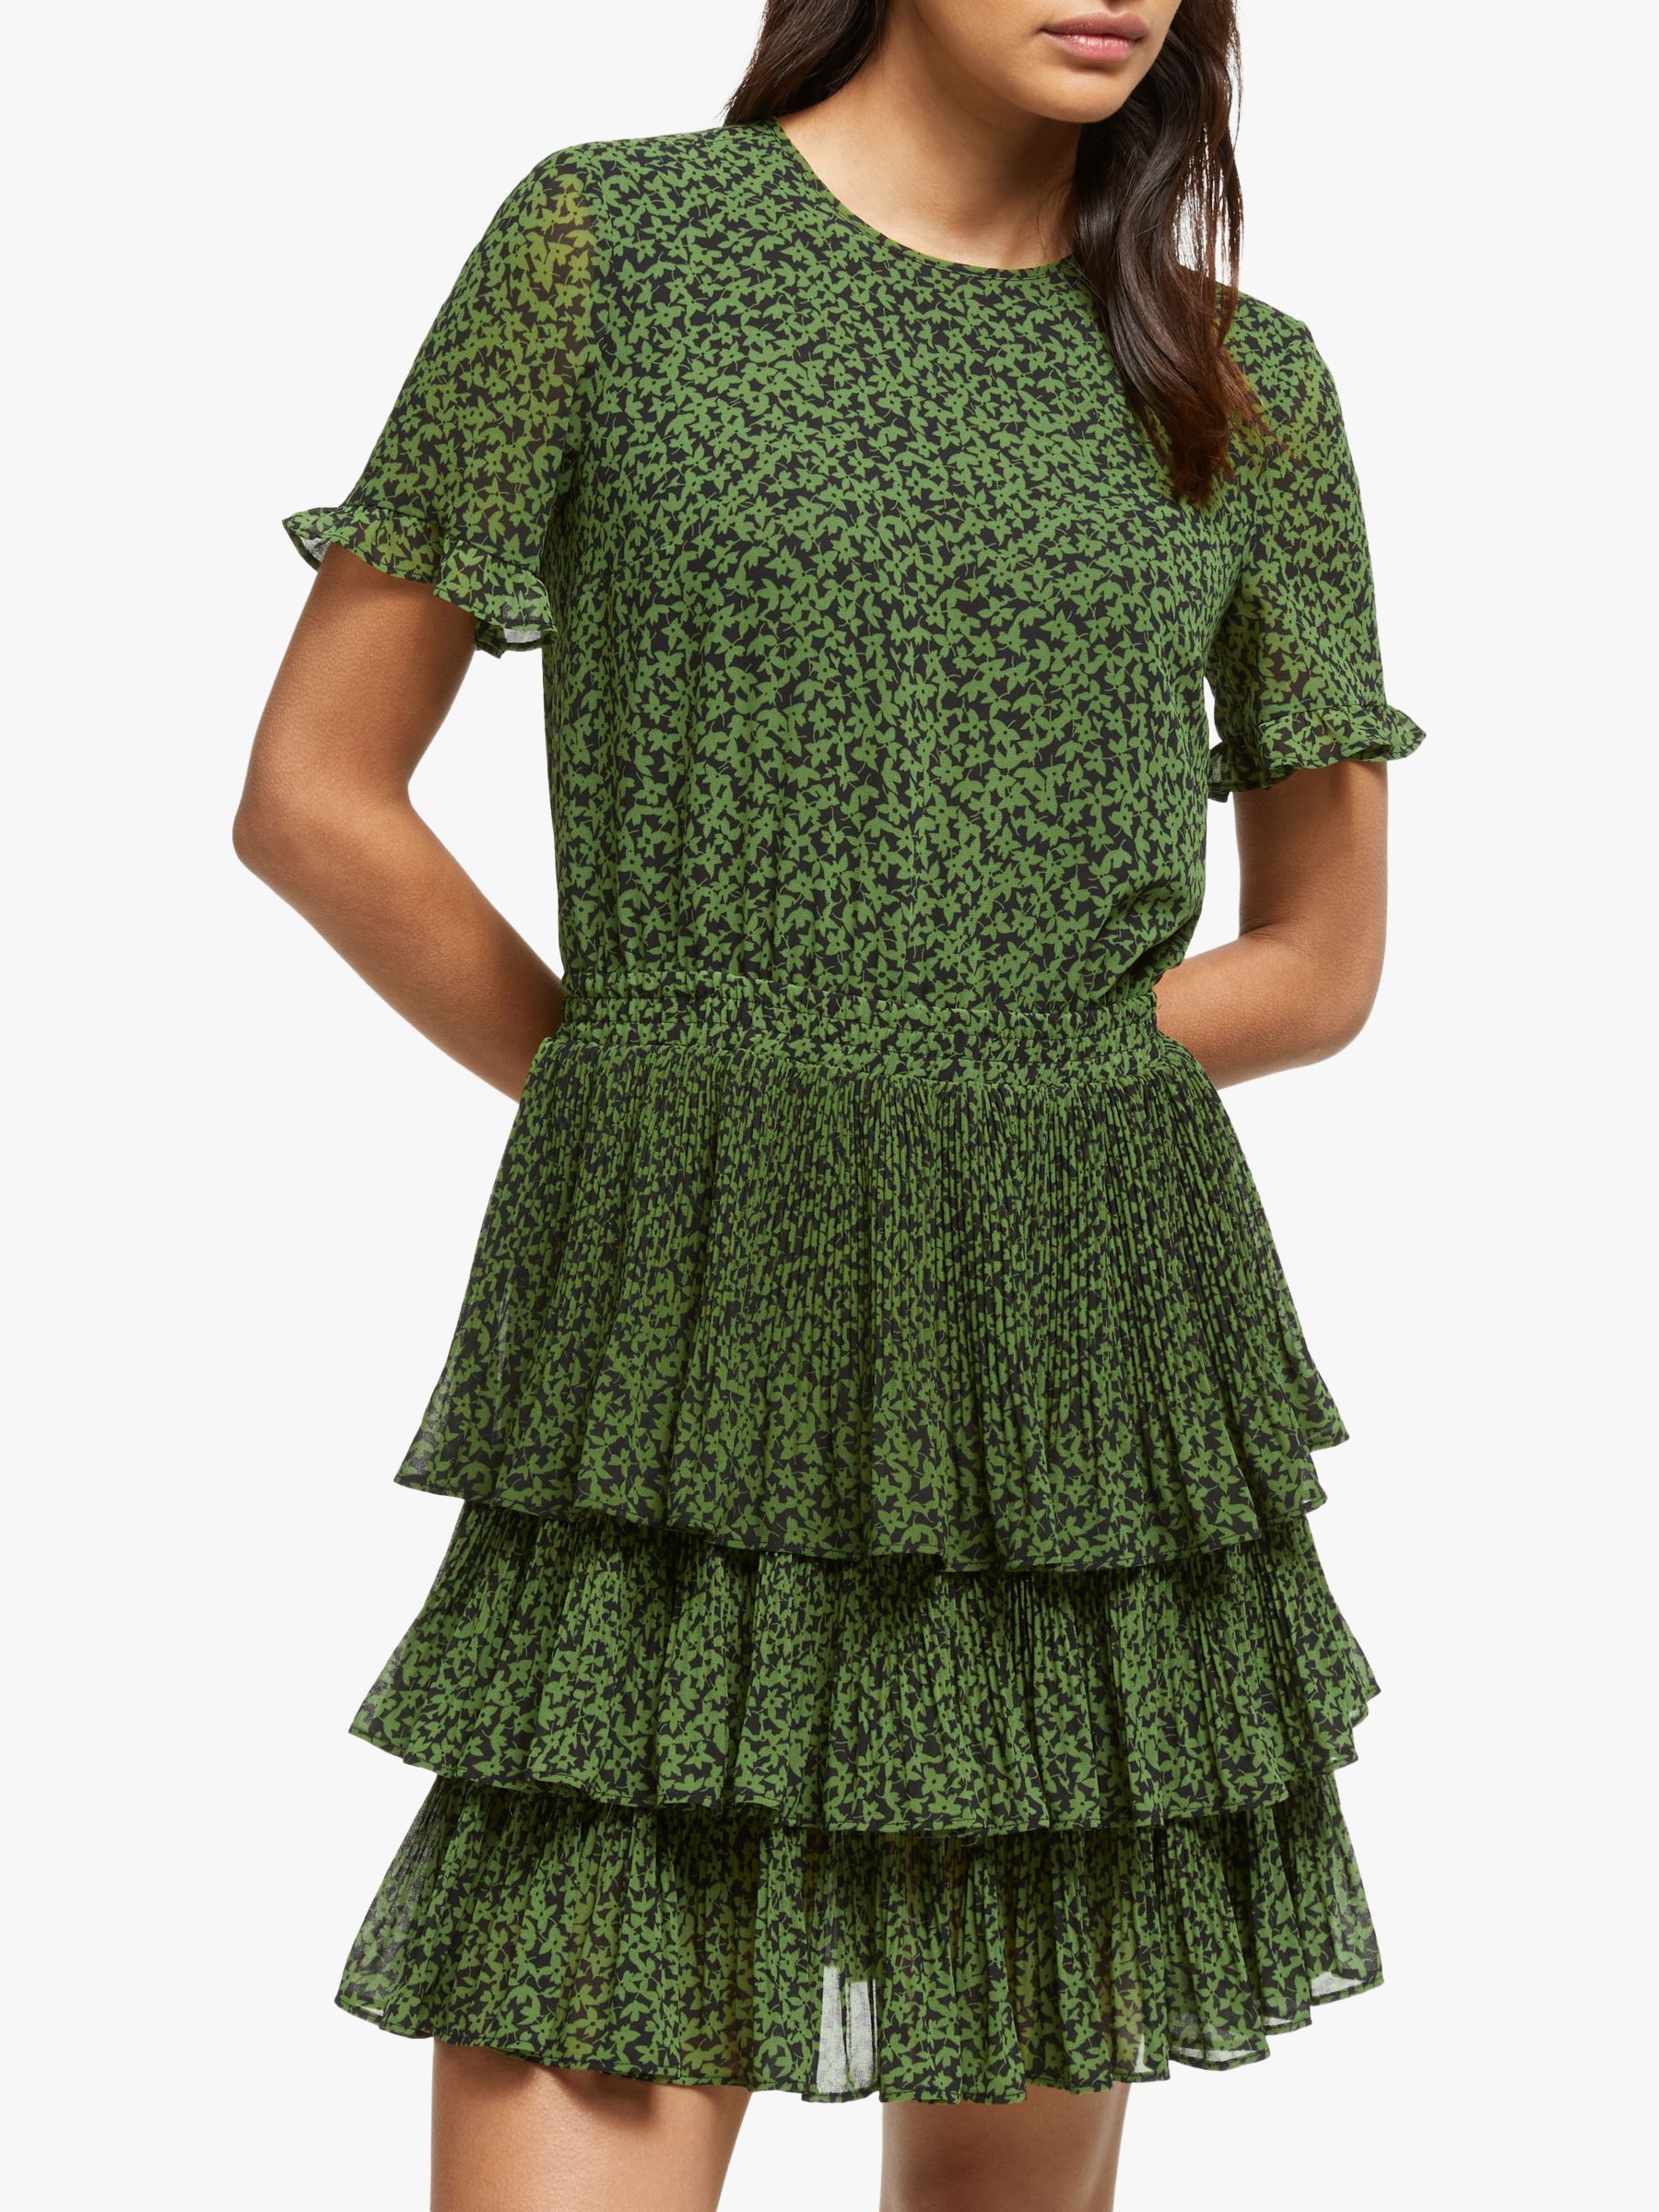 MICHAEL Michael Kors Mini Lilly Tier Dress, Black/Evergreen